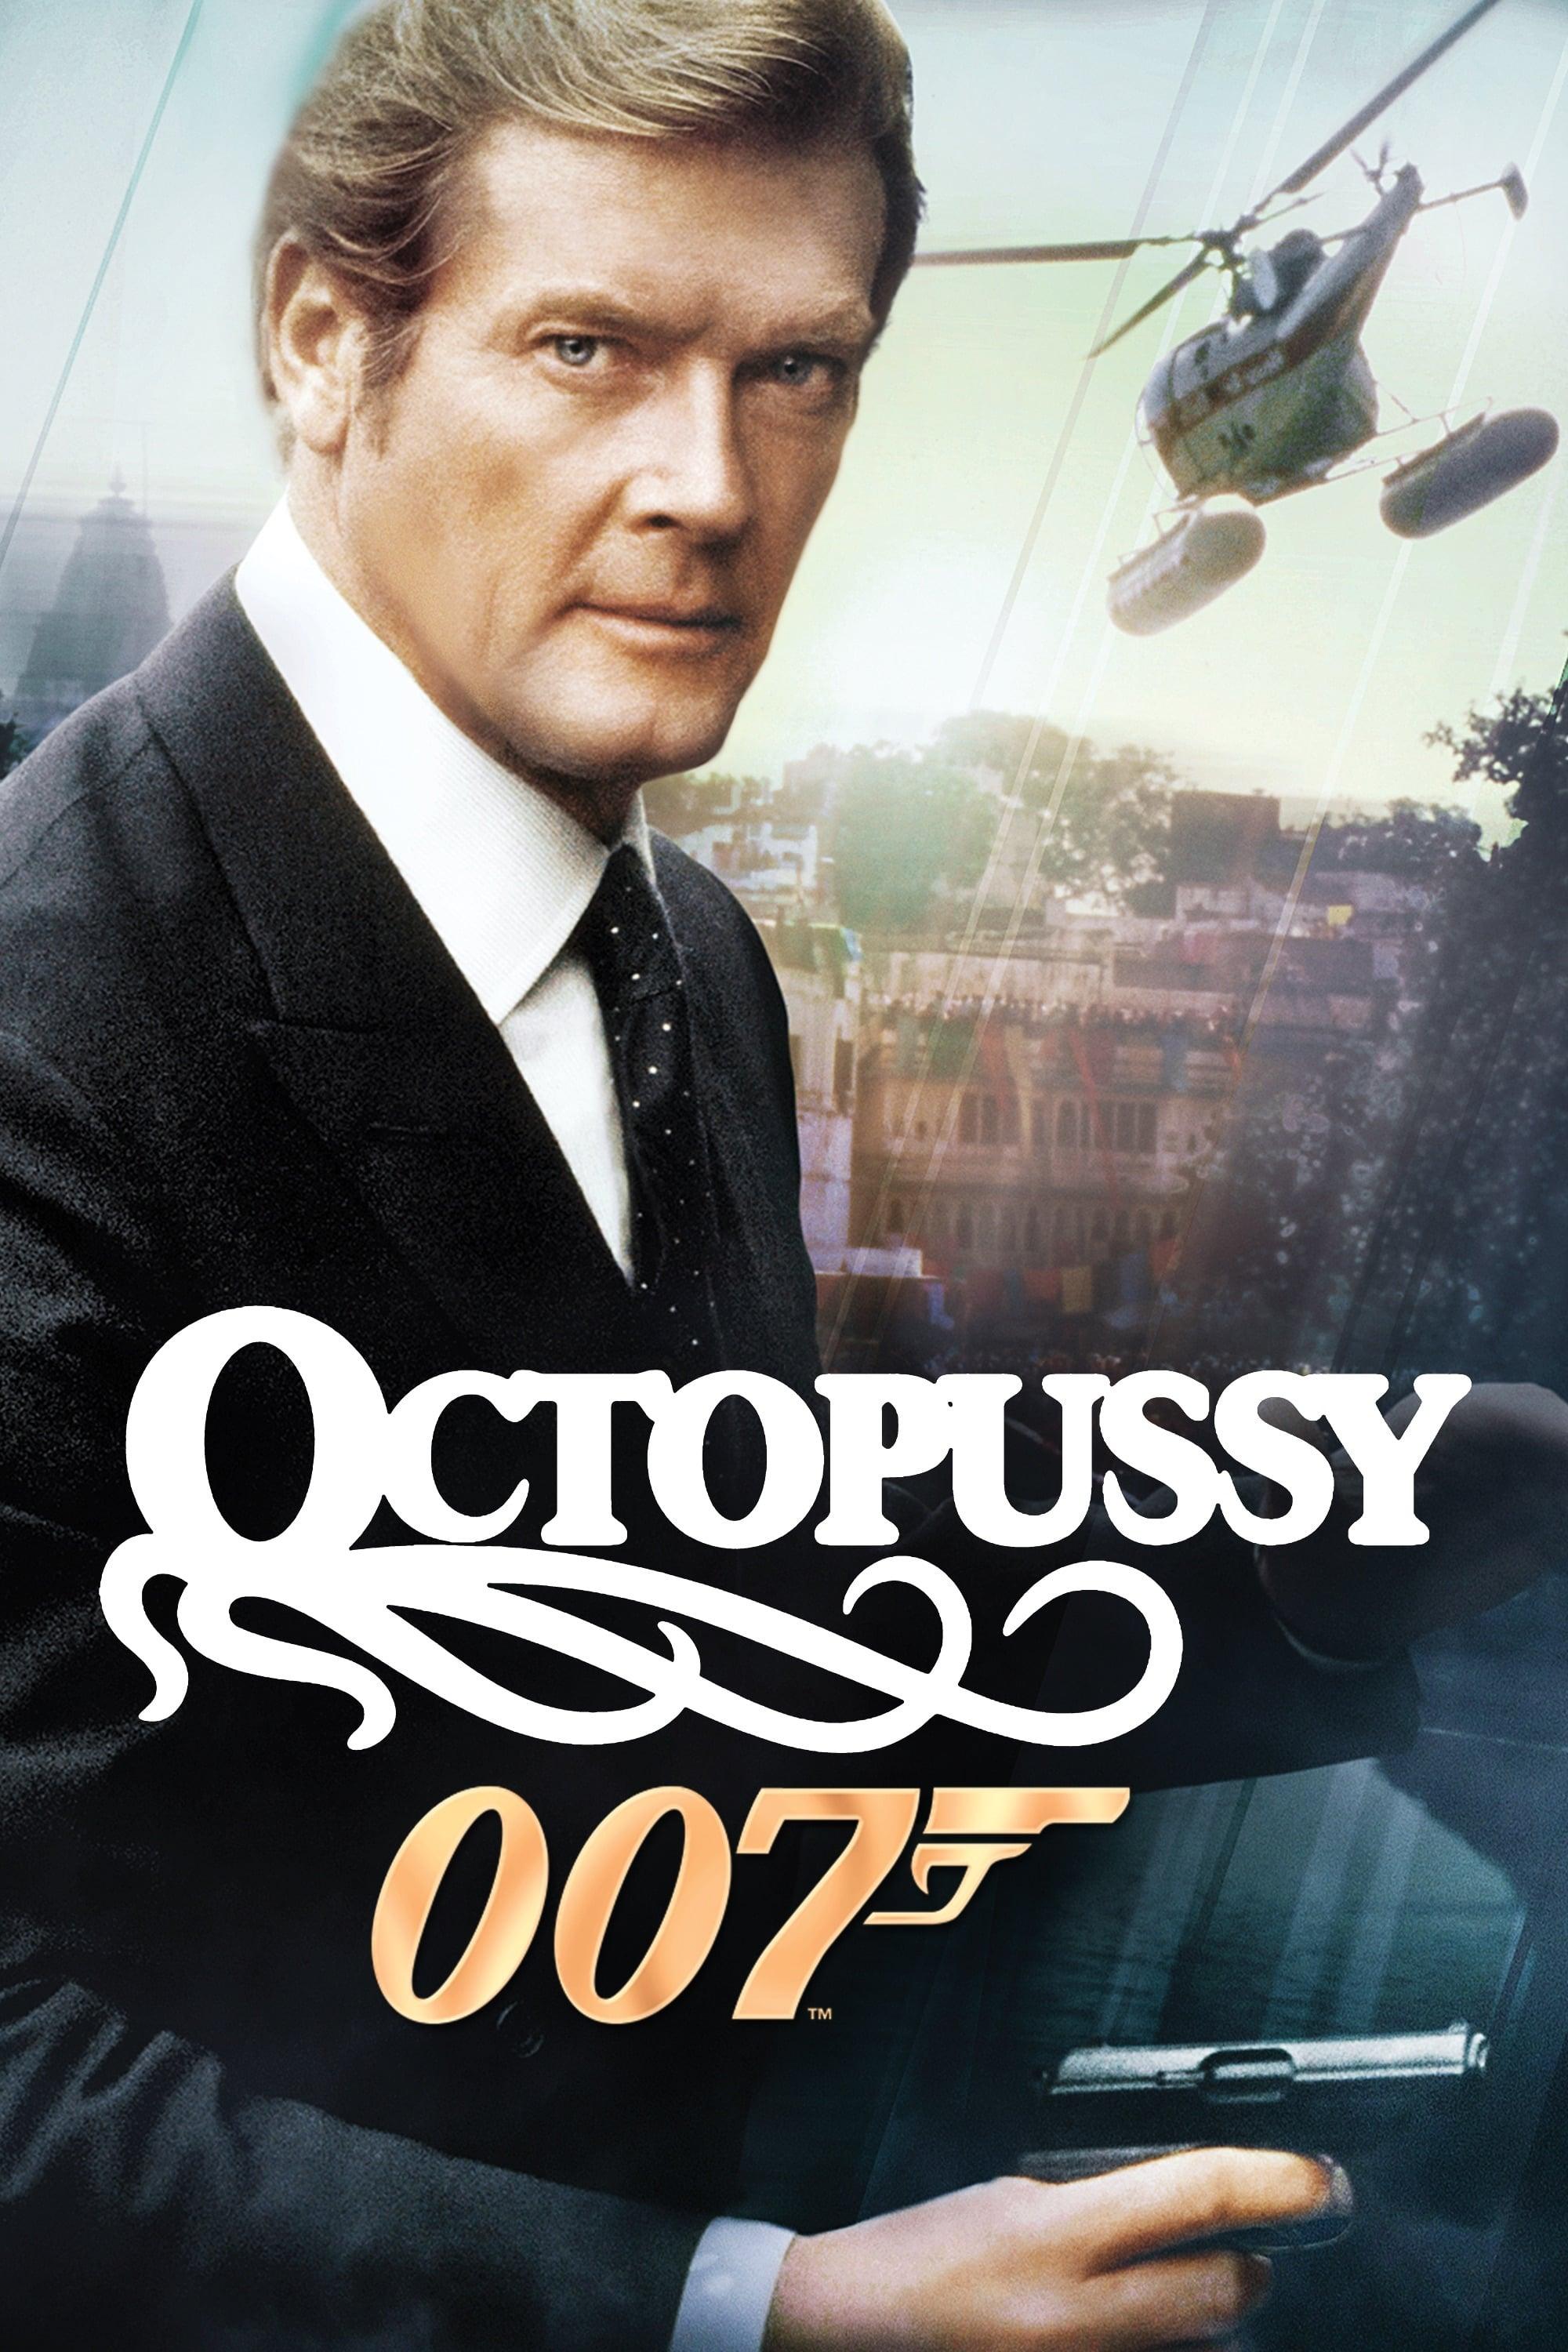 James Bond 007 - Octopussy poster